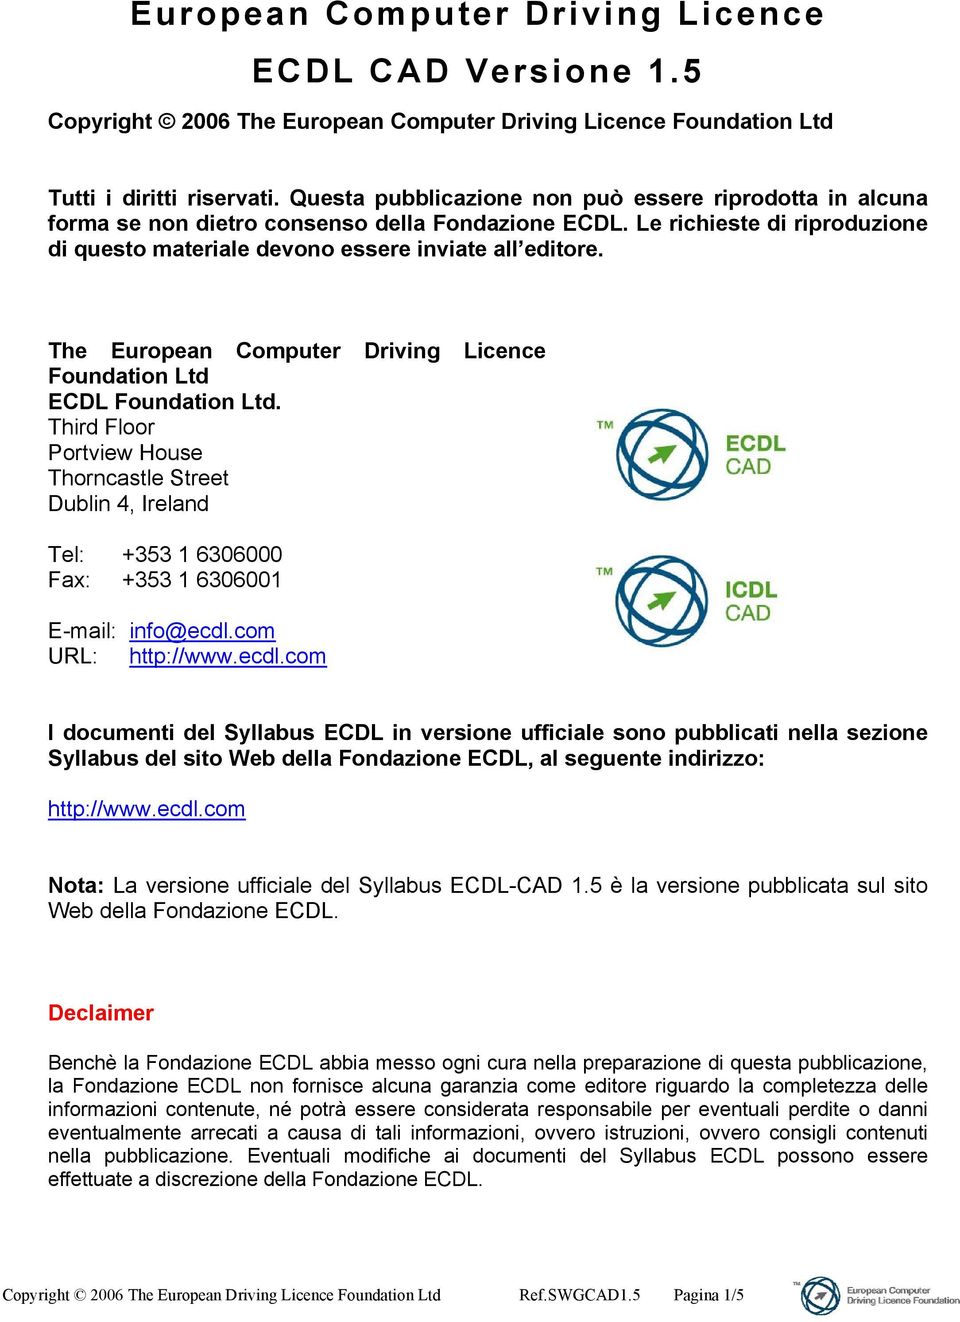 The European Computer Driving Licence Foundation Ltd ECDL Foundation Ltd. Third Floor Portview House Thorncastle Street Dublin 4, Ireland Tel: +353 1 6306000 Fax: +353 1 6306001 E-mail: info@ecdl.